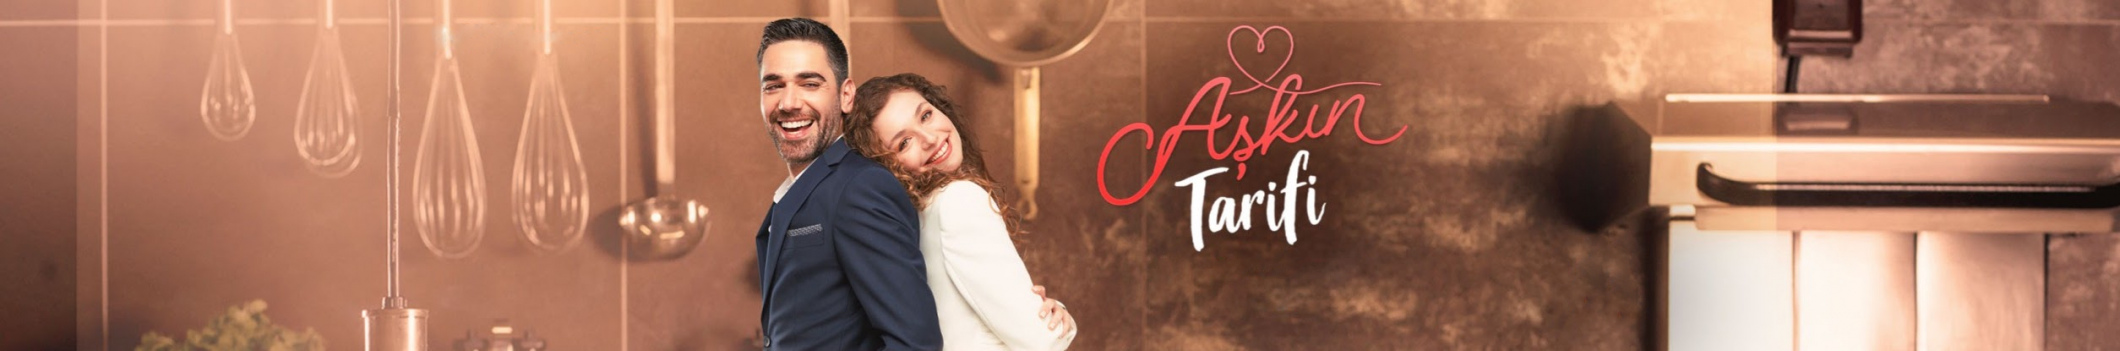 Askin Tarifi Season 1 English subtitles | Recipe of Love